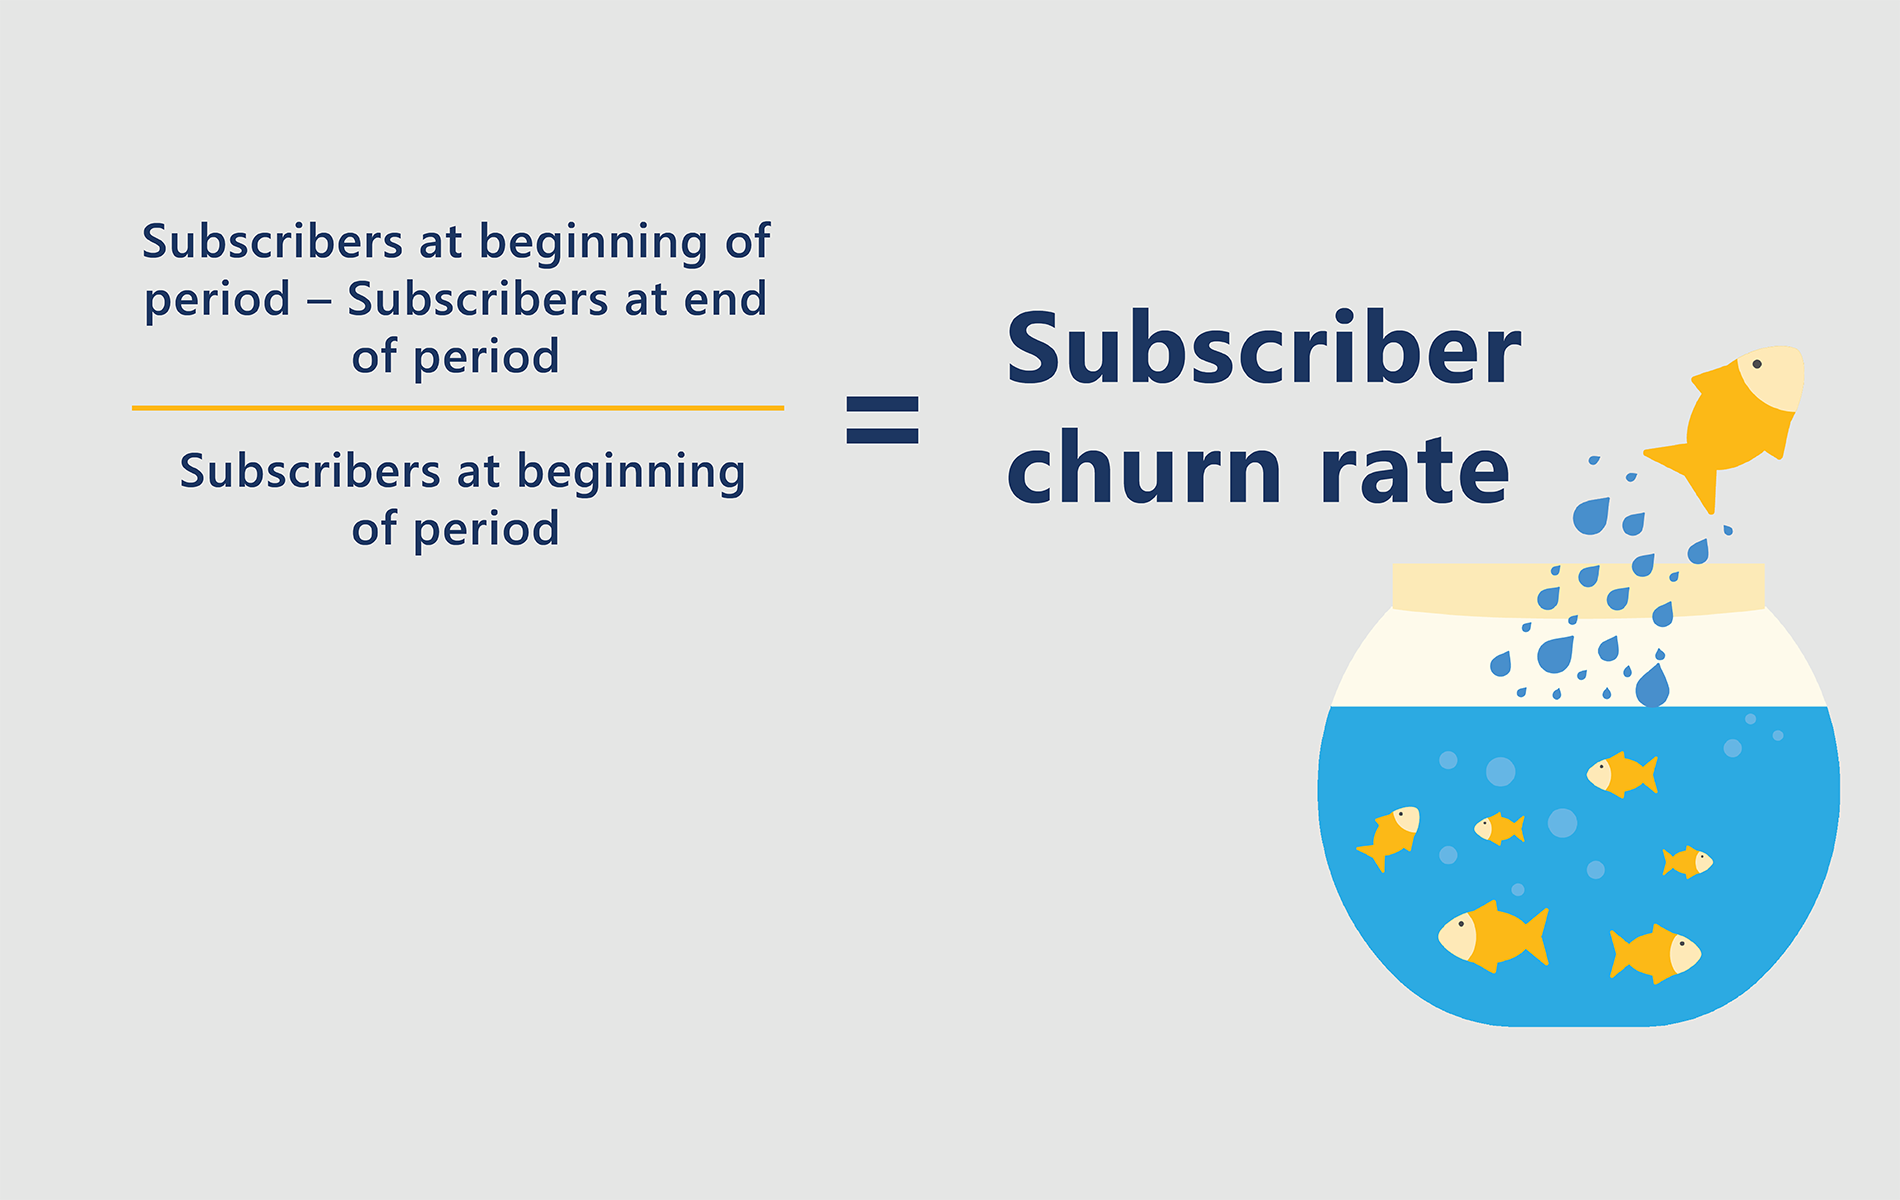 Subscriber churn metrics – The subscriber churn rate